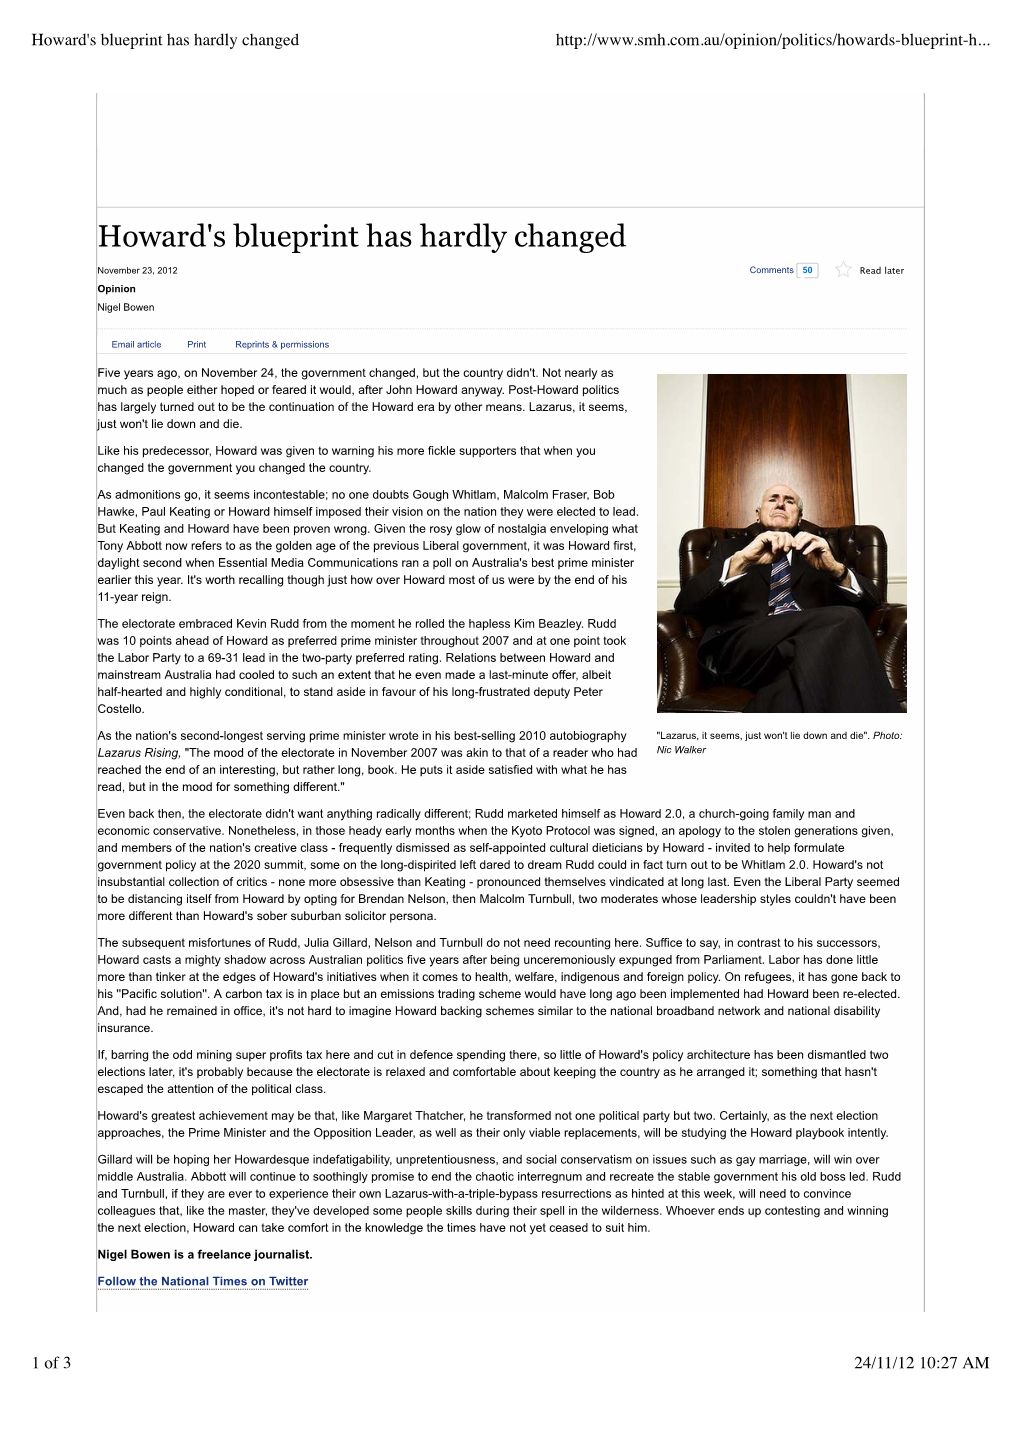 Howard's Blueprint Has Hardly Changed